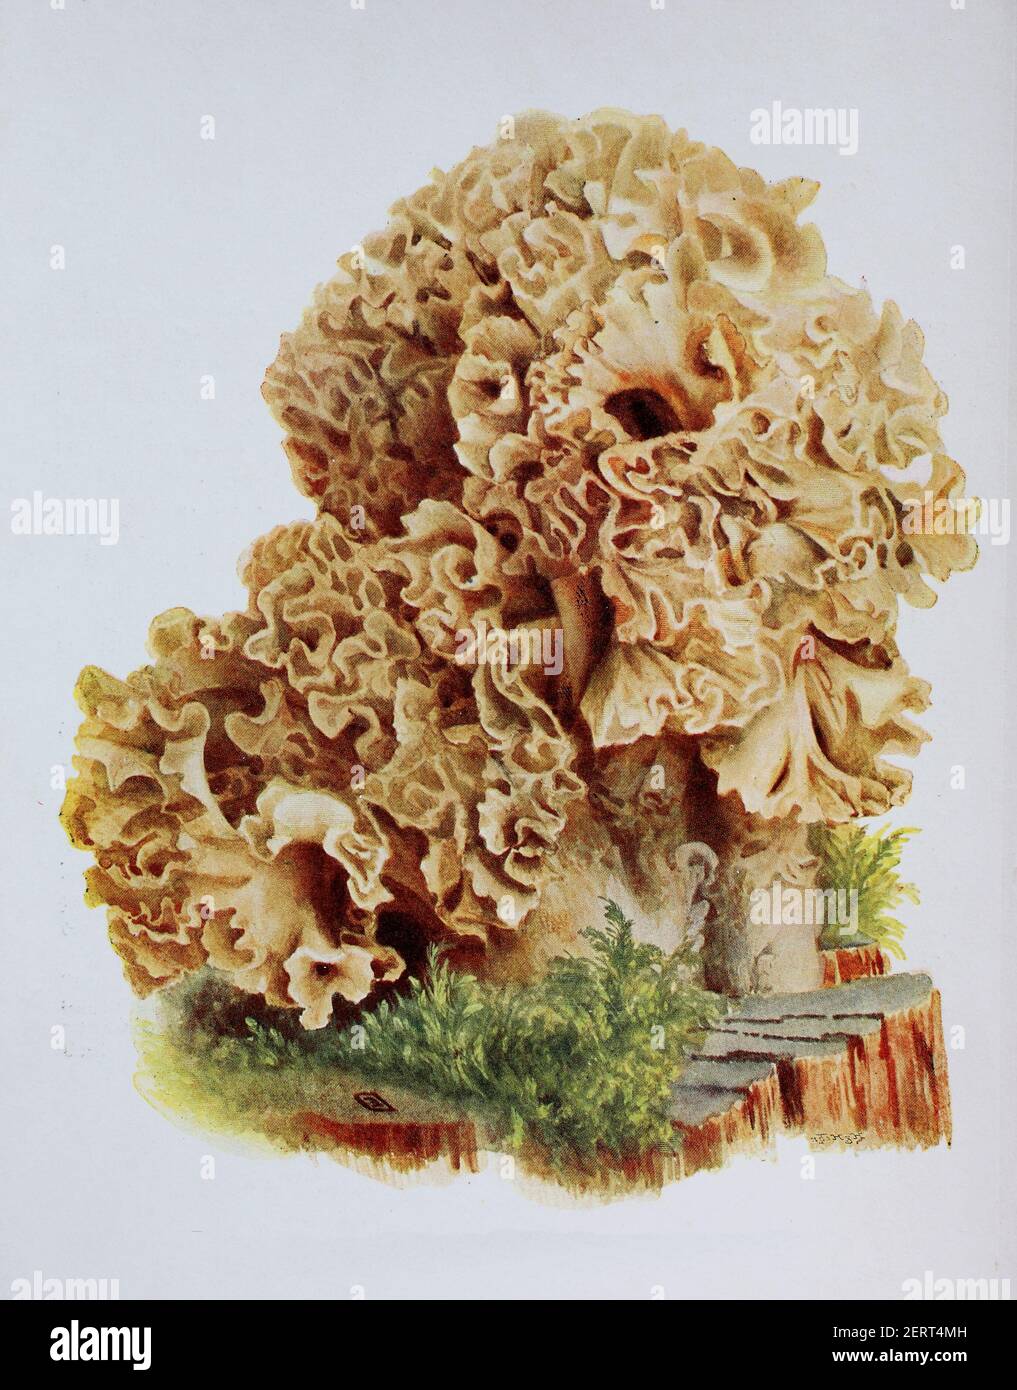 Sparassis cripspa è una specie di fungo del genere Sparassis. In inglese è talvolta chiamato Cauliflower Fungus, riproduzione digitale di una immagine di Emil Doerstling (1859-1940) Foto Stock